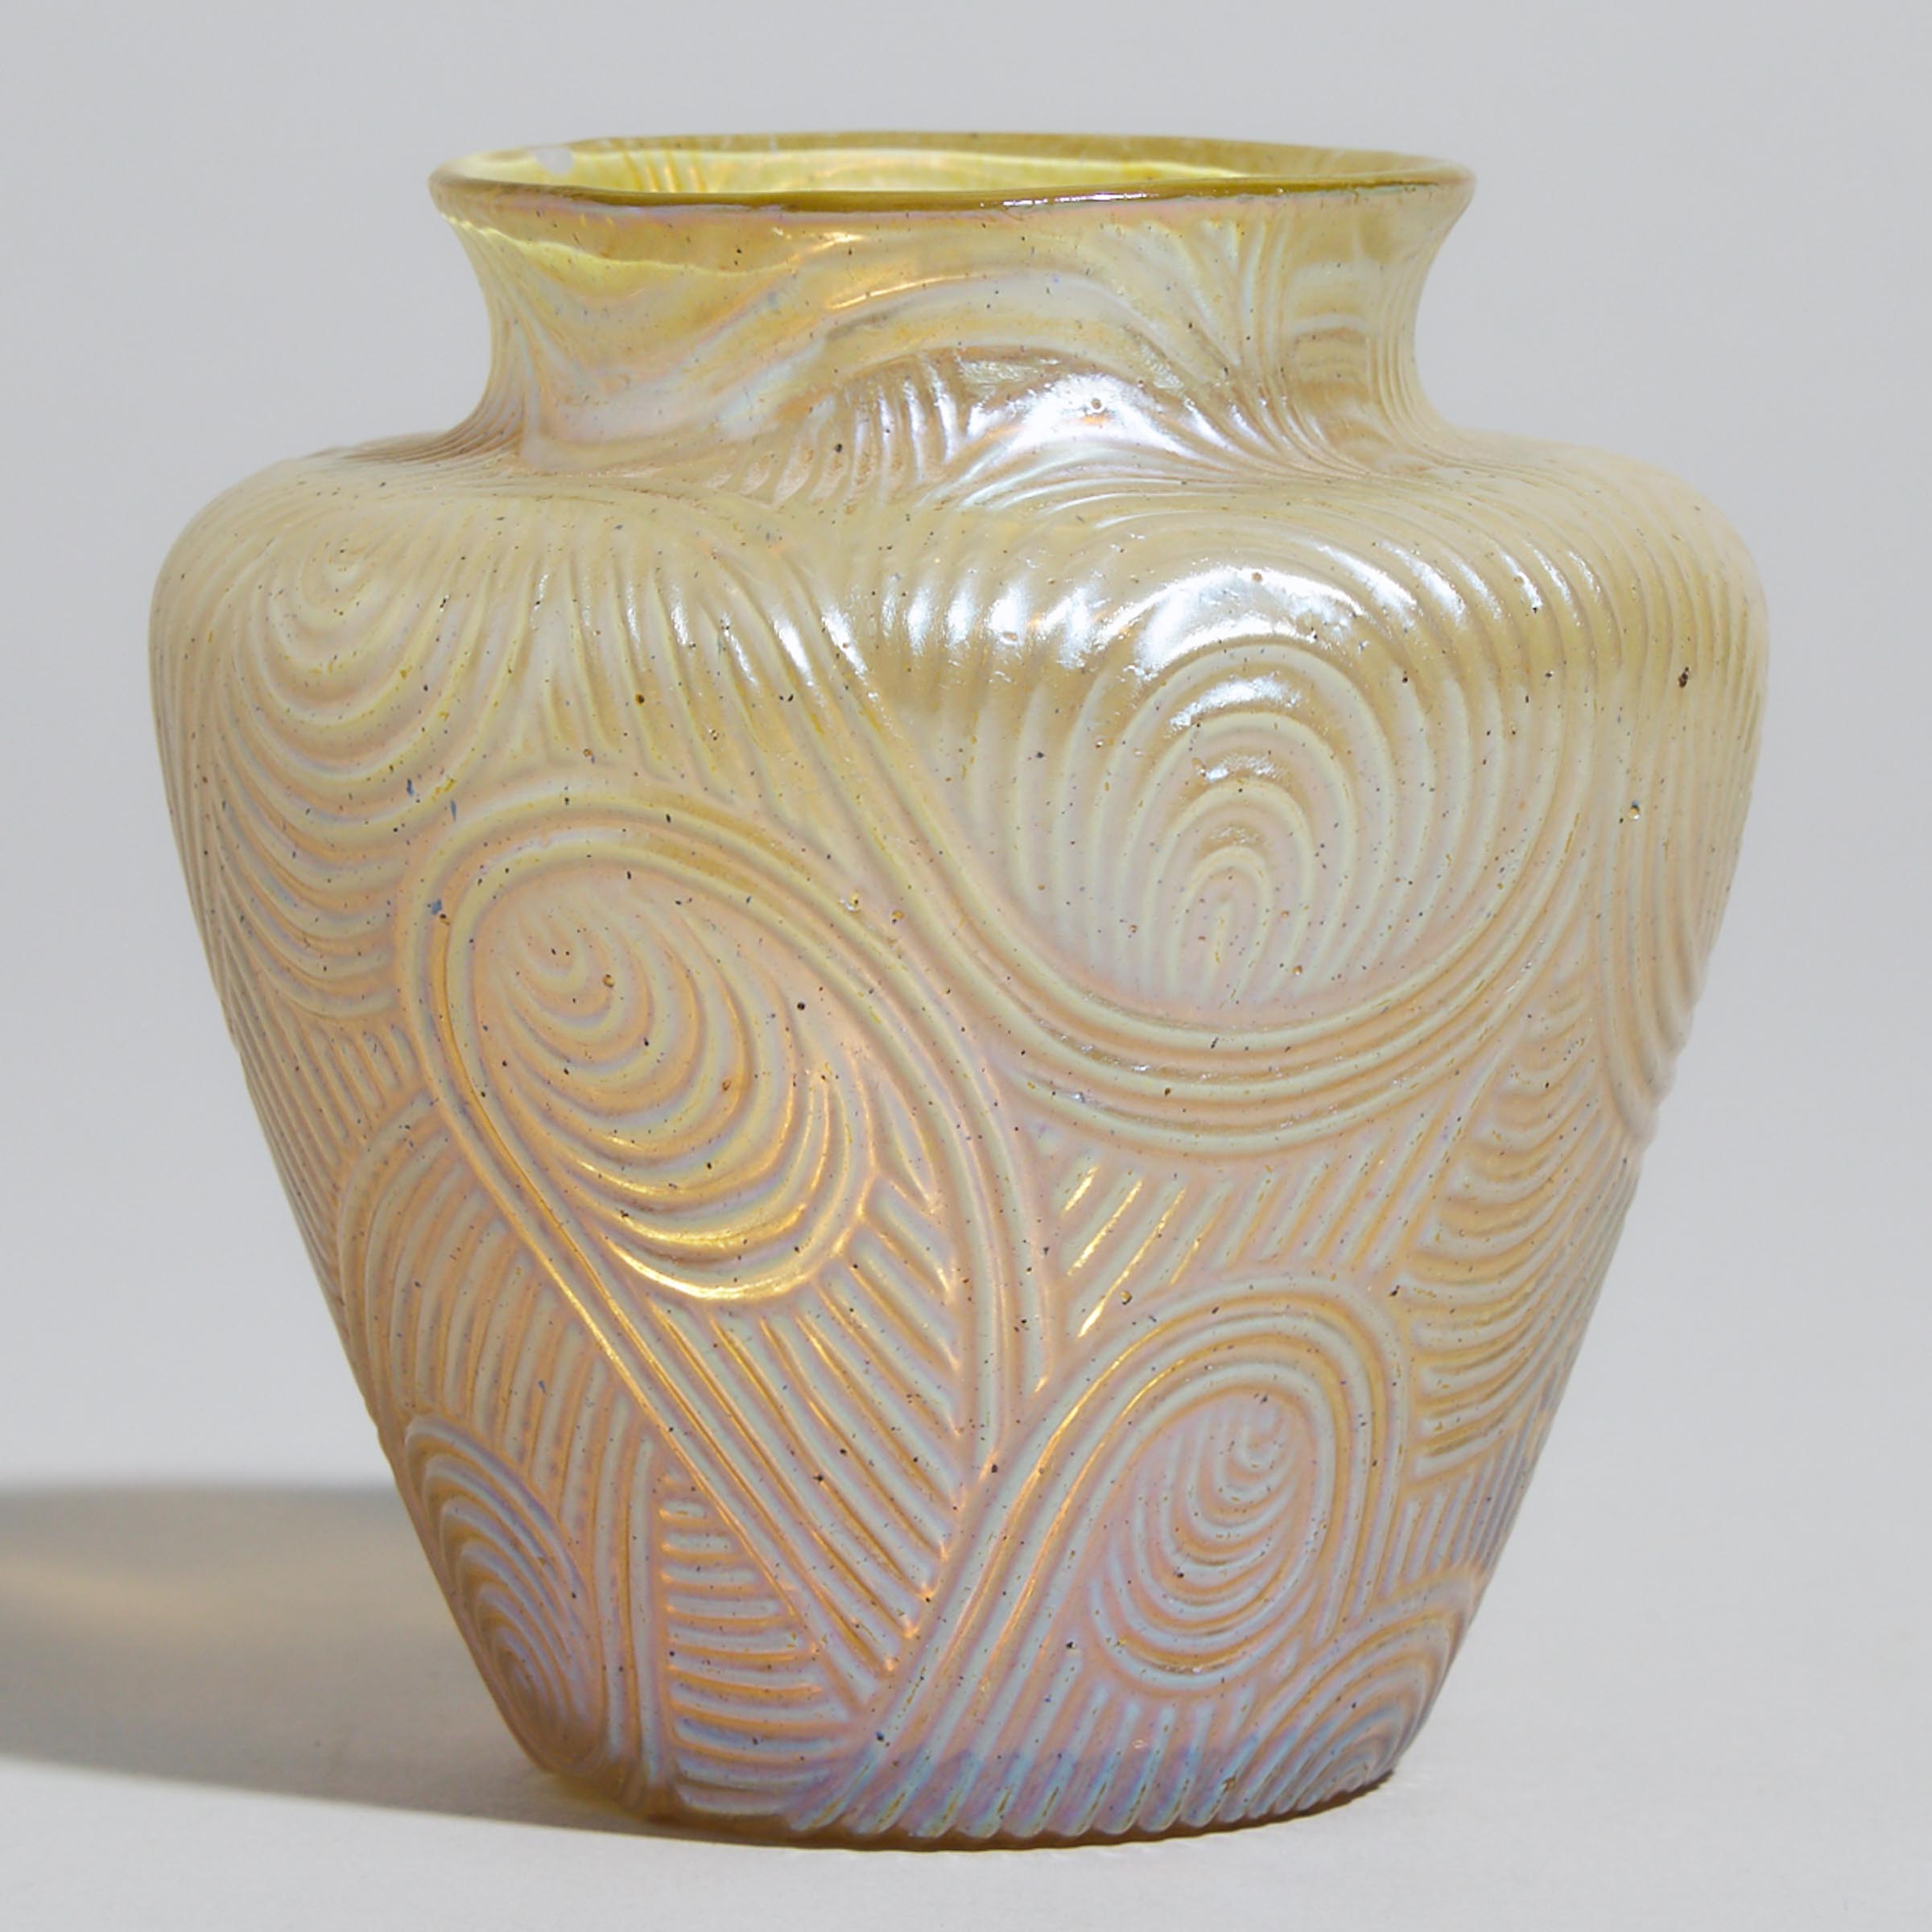 Austrian Iridescent Glass Vase, probably Loetz, c.1900